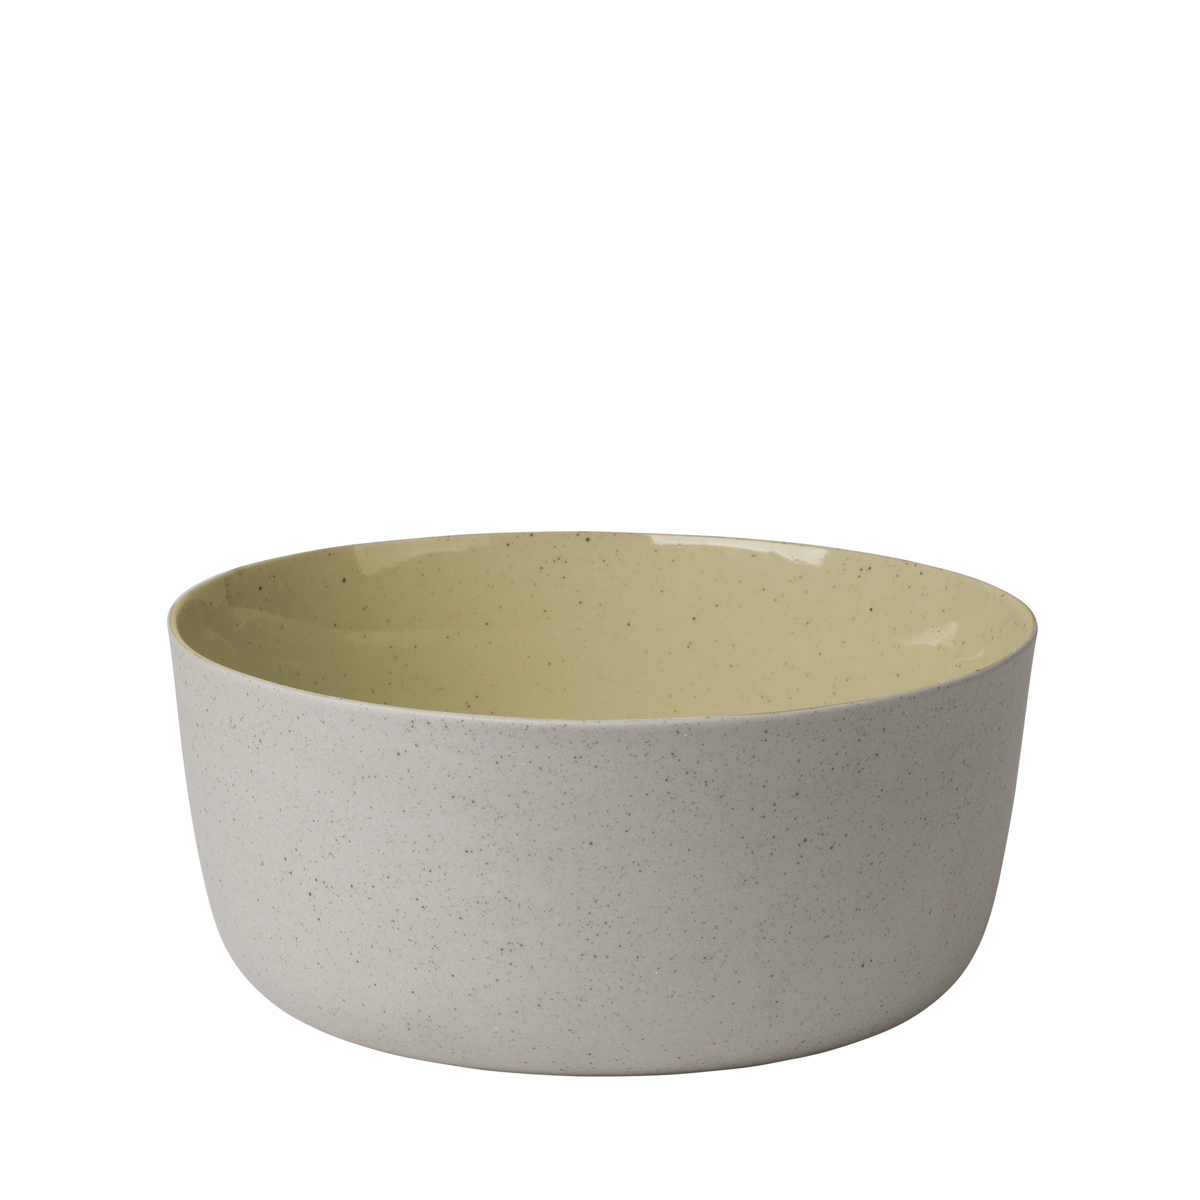 Schale -SABLO- Savannah Size L, Ø 20 cm. Material: Keramik. Von Blomus.